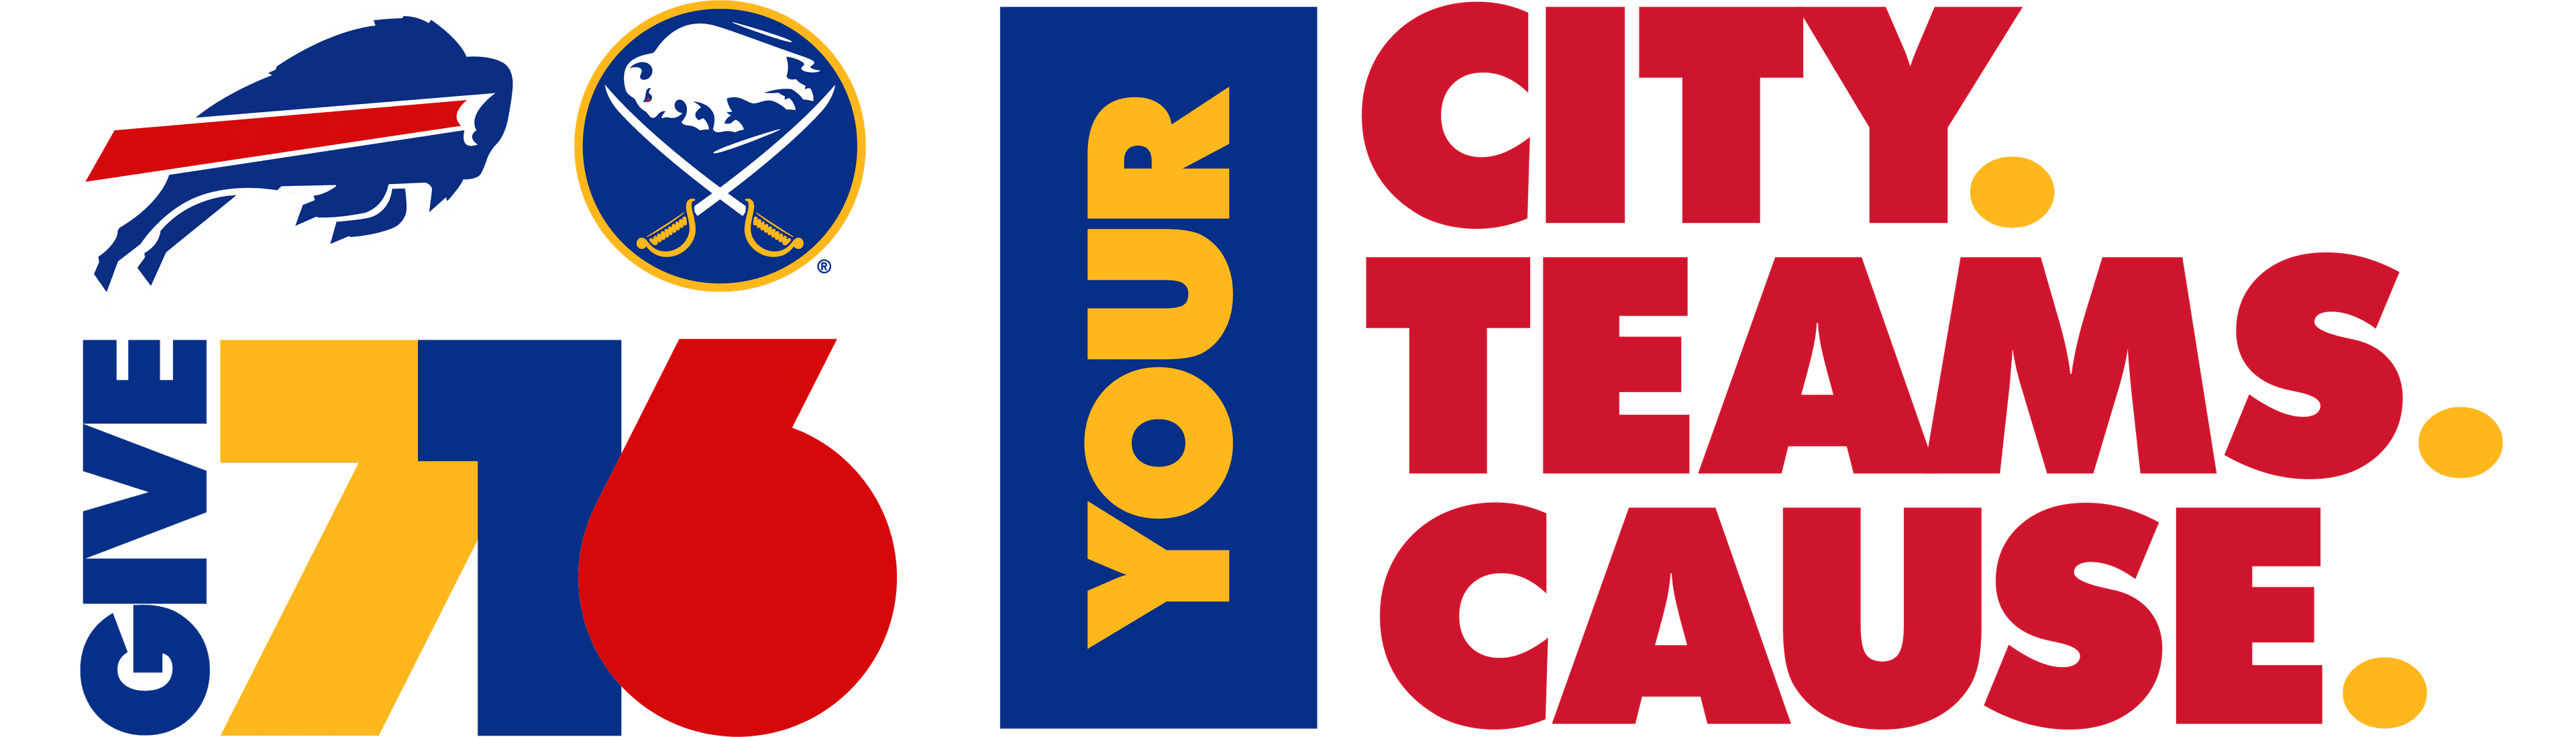 Buffalo Giving Day 2021 logo image